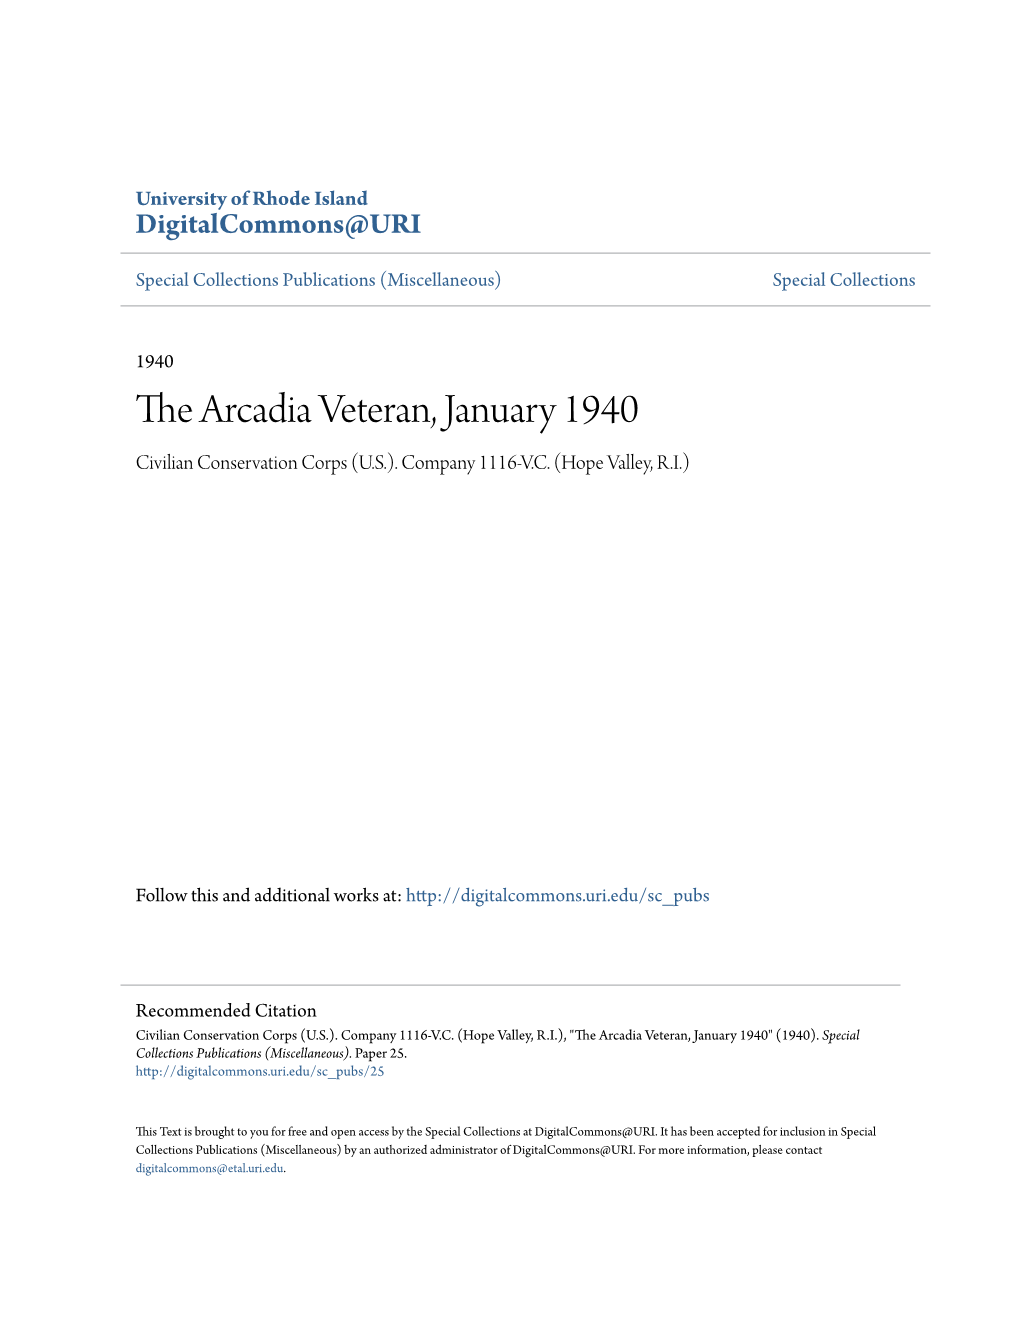 The Arcadia Veteran, January 1940 Civilian Conservation Corps (U.S.)